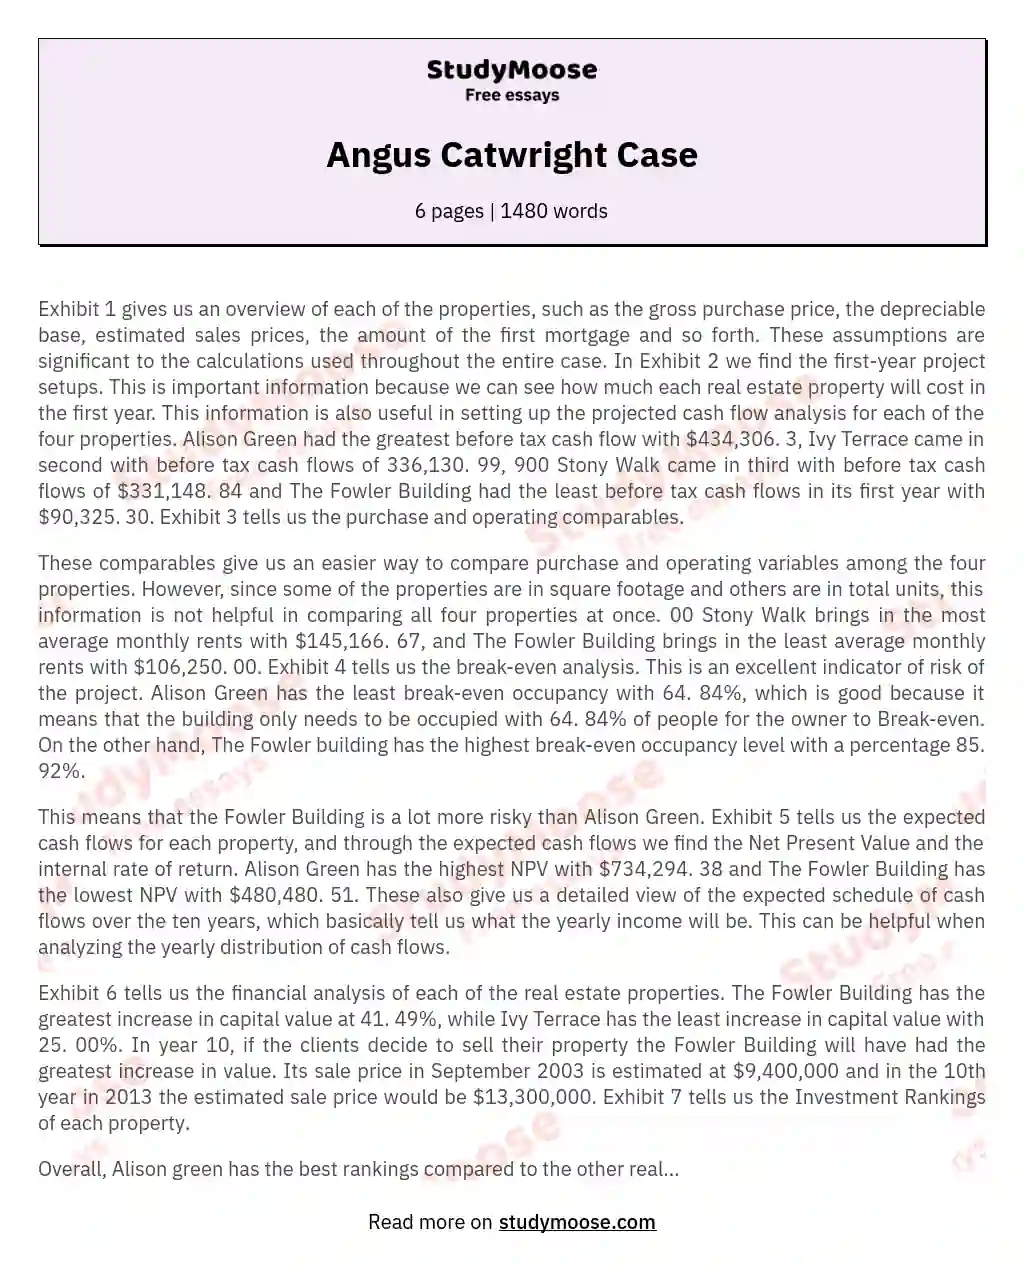 Angus Catwright Case essay